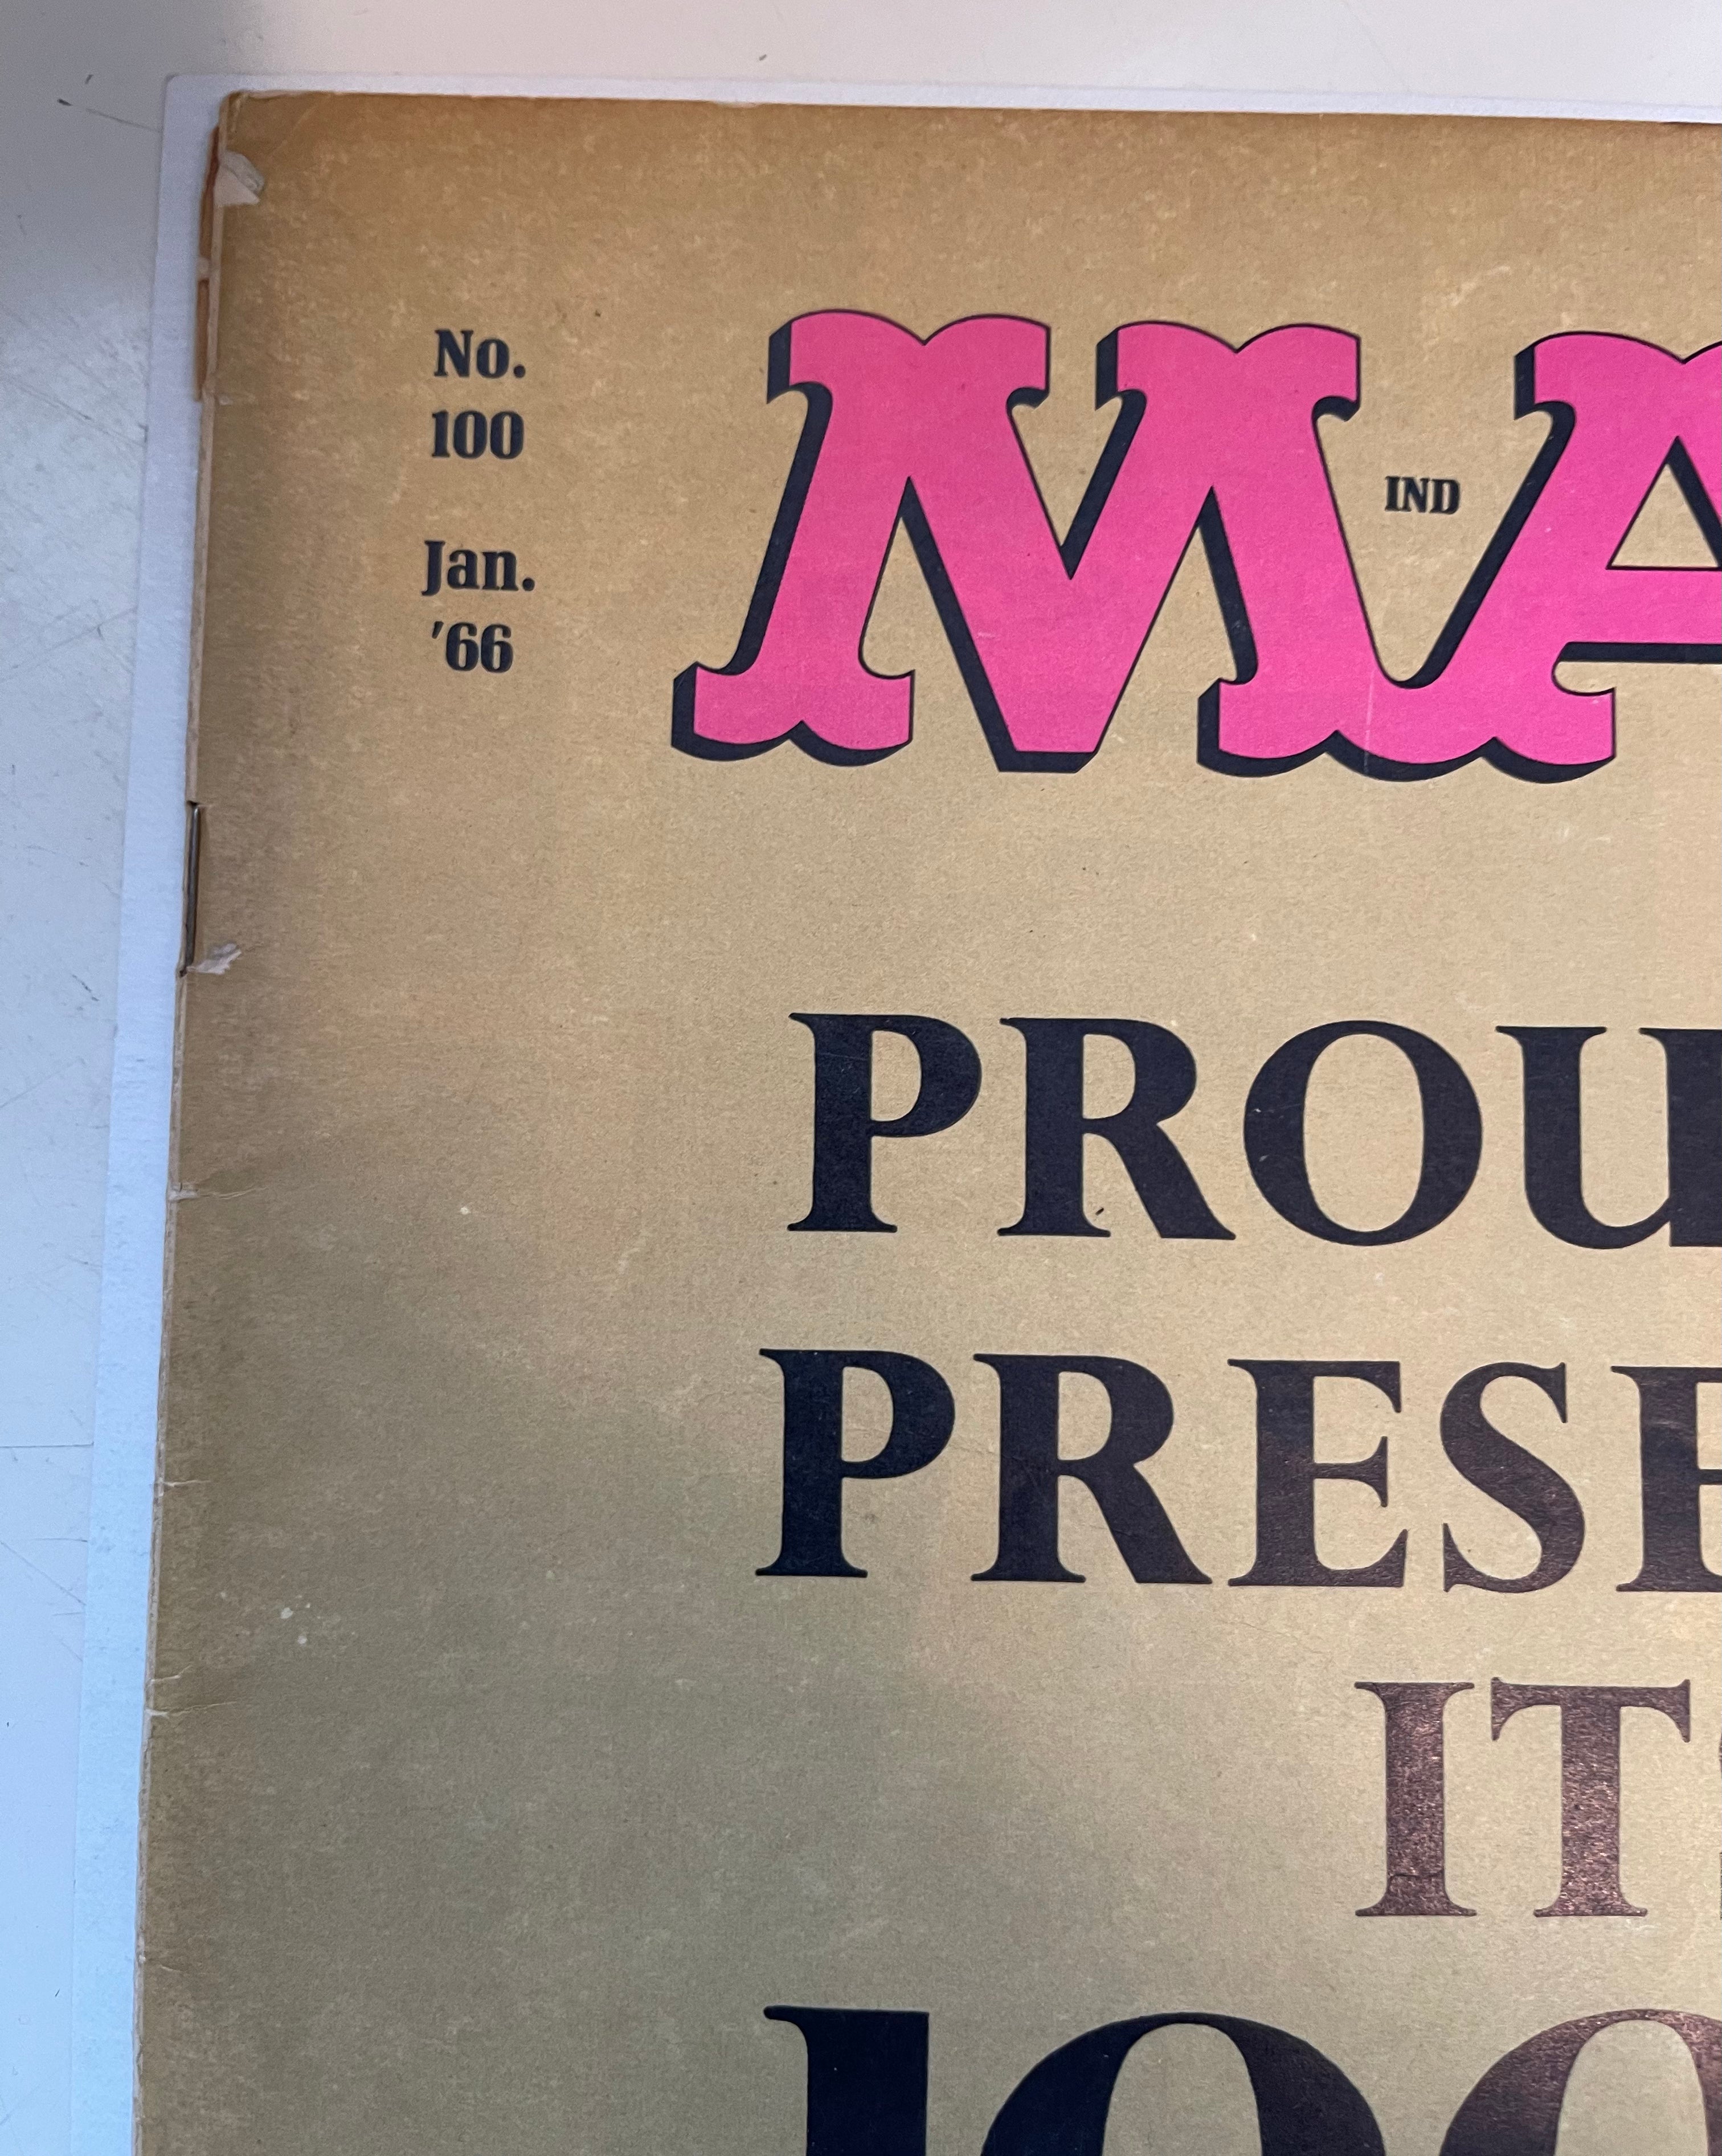 Mad Magazine #100 vintage magazine 1966